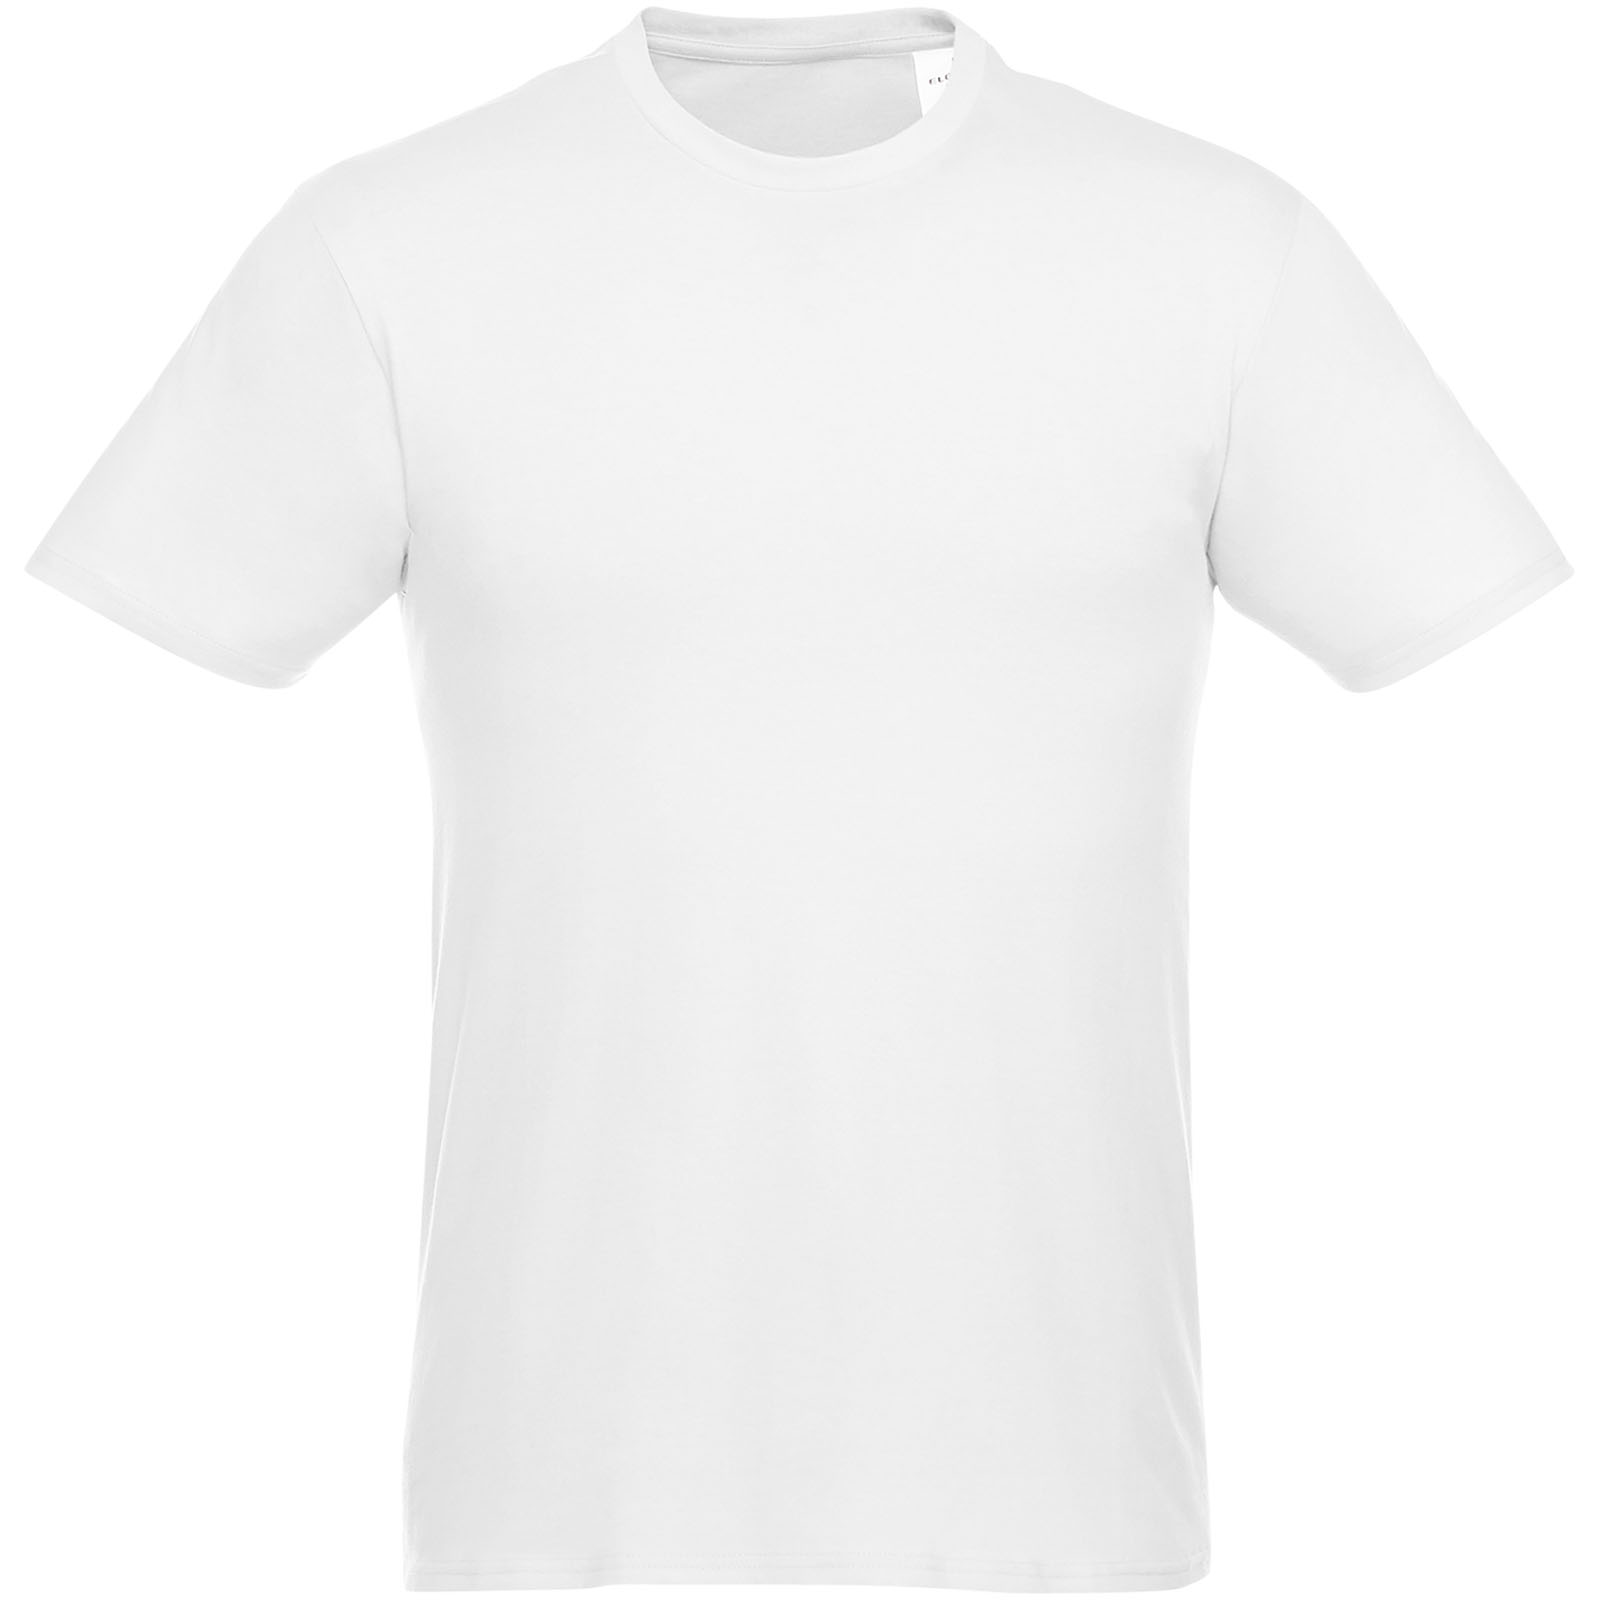 Advertising T-shirts - Heros short sleeve men's t-shirt - 1